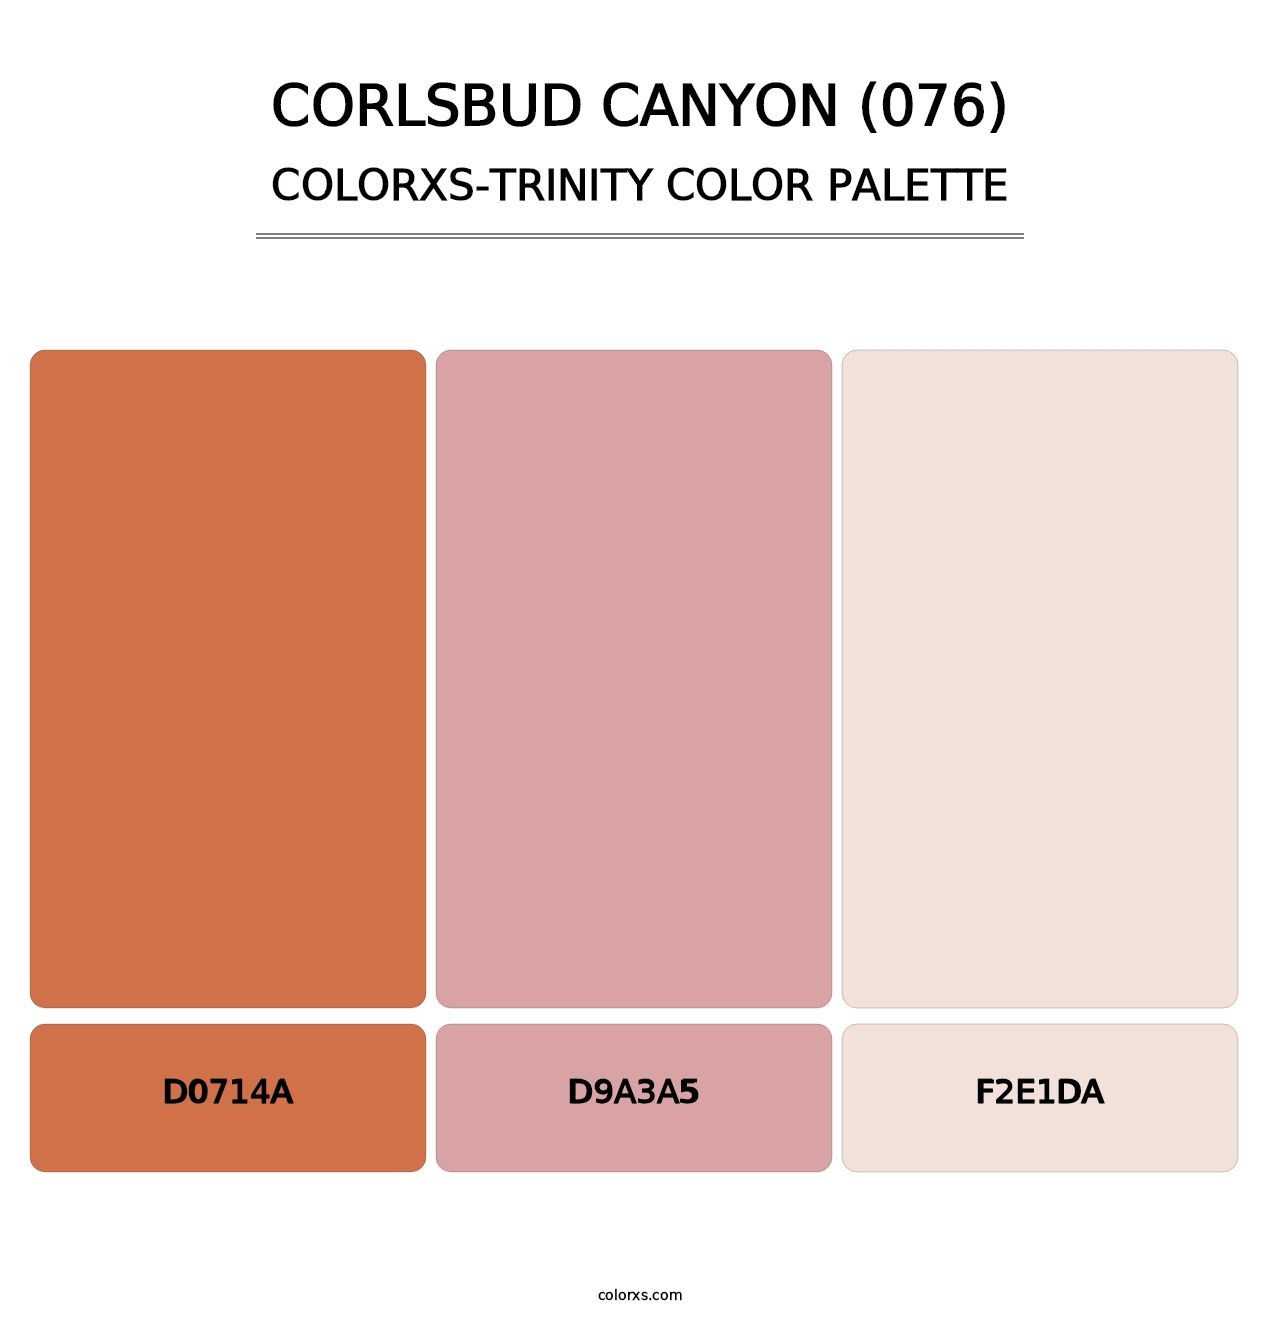 Corlsbud Canyon (076) - Colorxs Trinity Palette